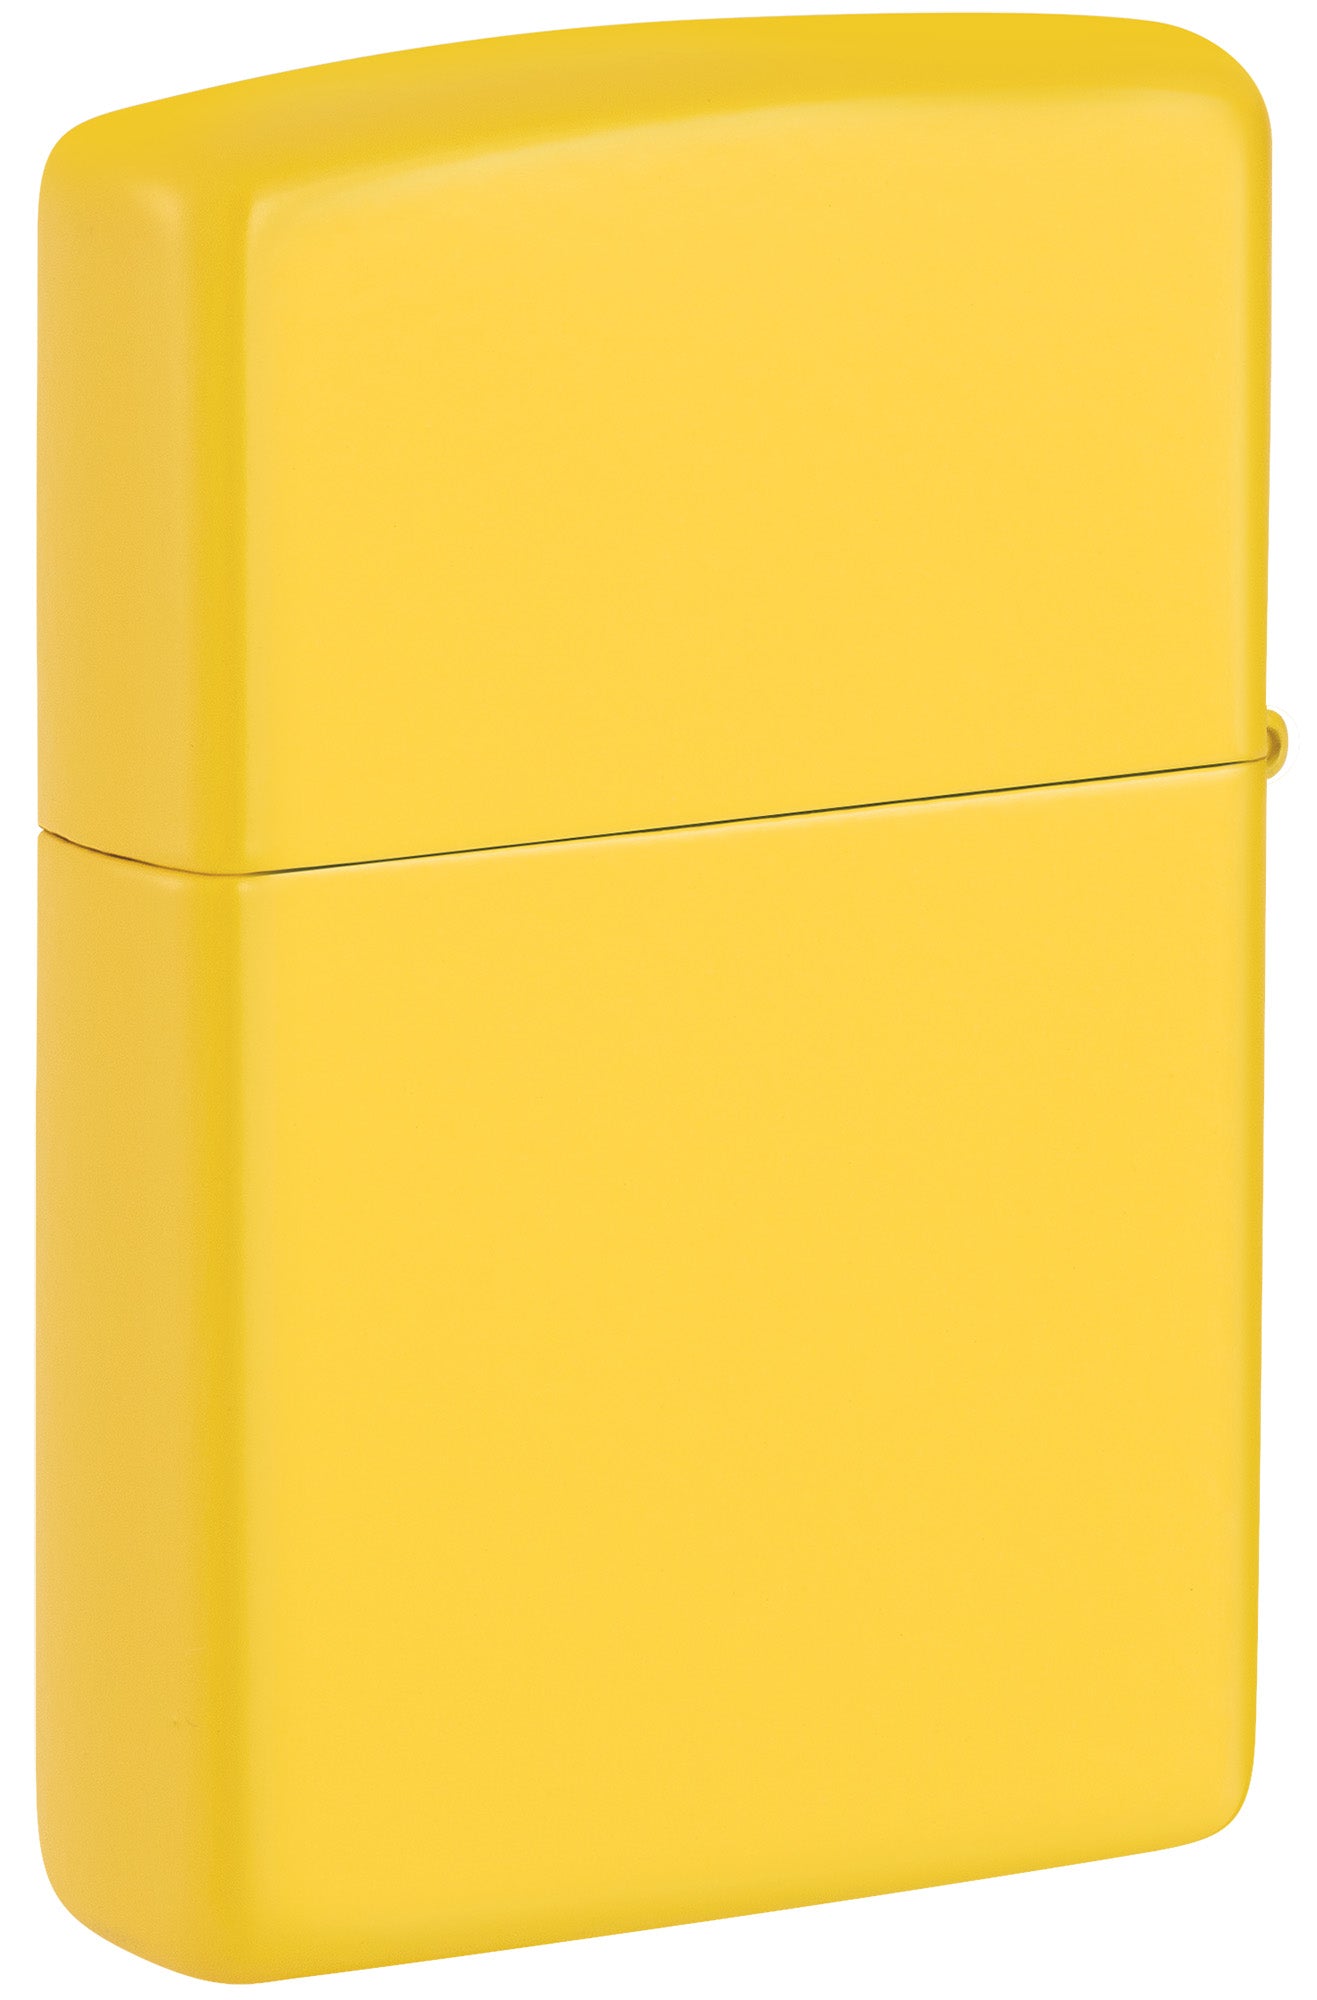 Zippo Lighter: Sunflower - 46019